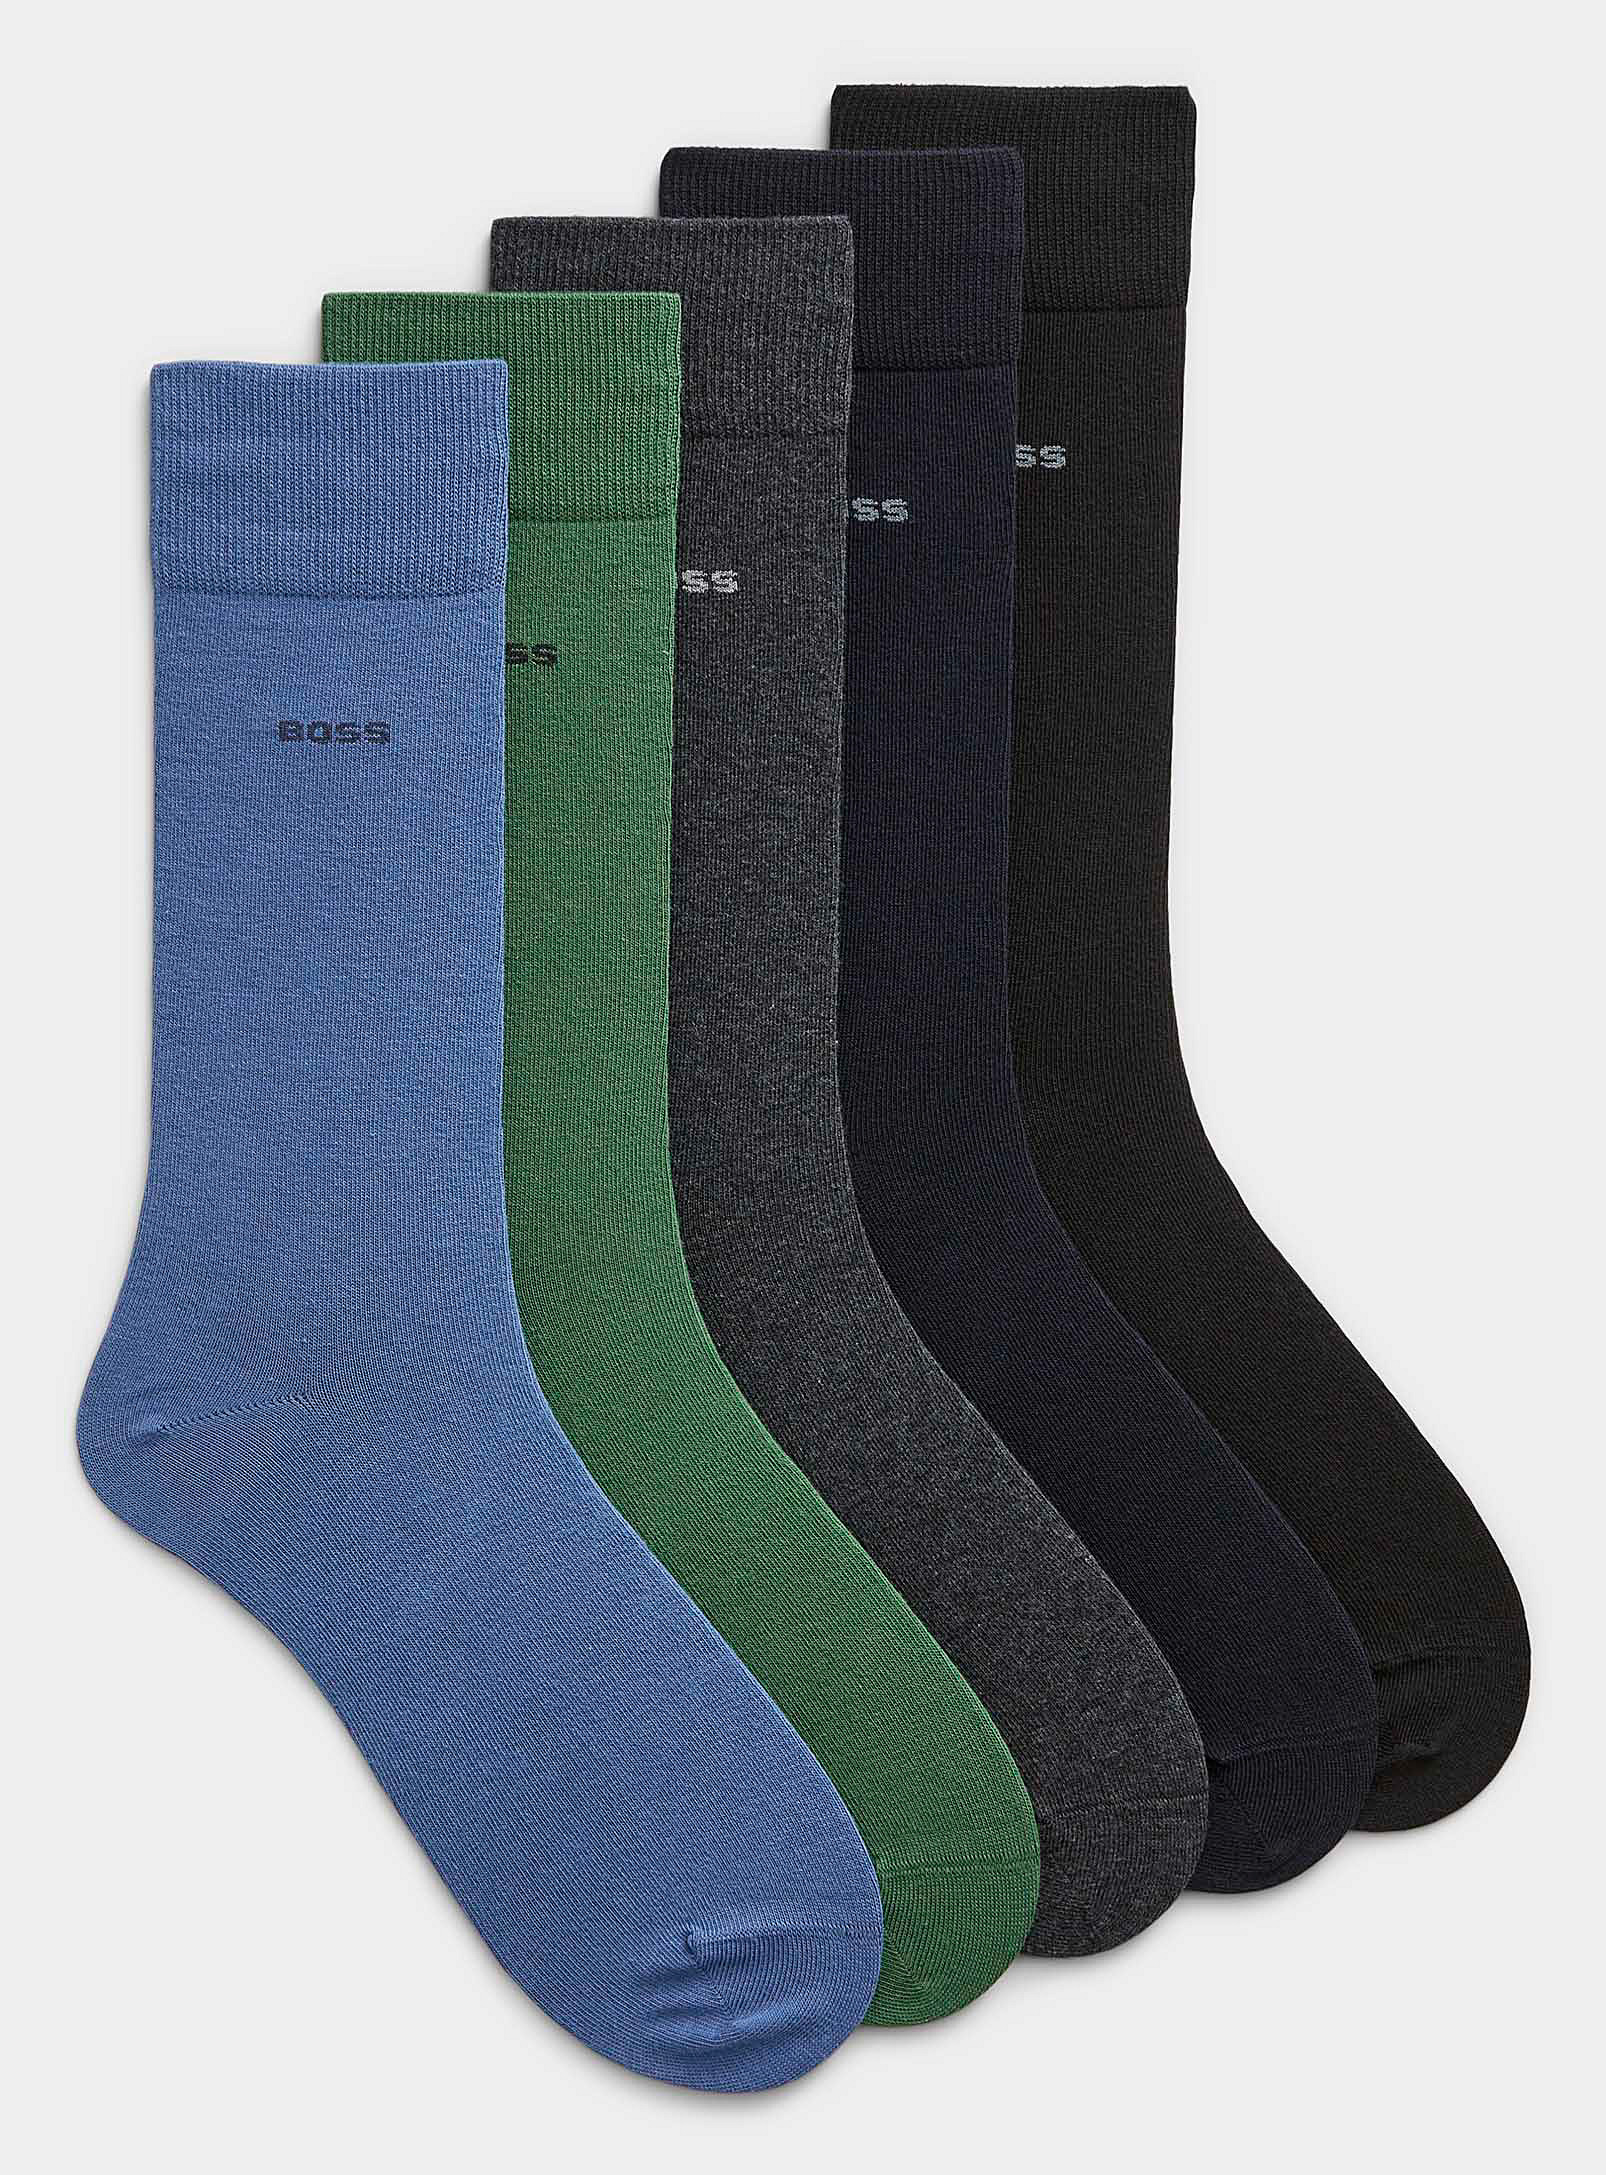 BOSS - Men's Neutral and colourful dress socks 5-pack